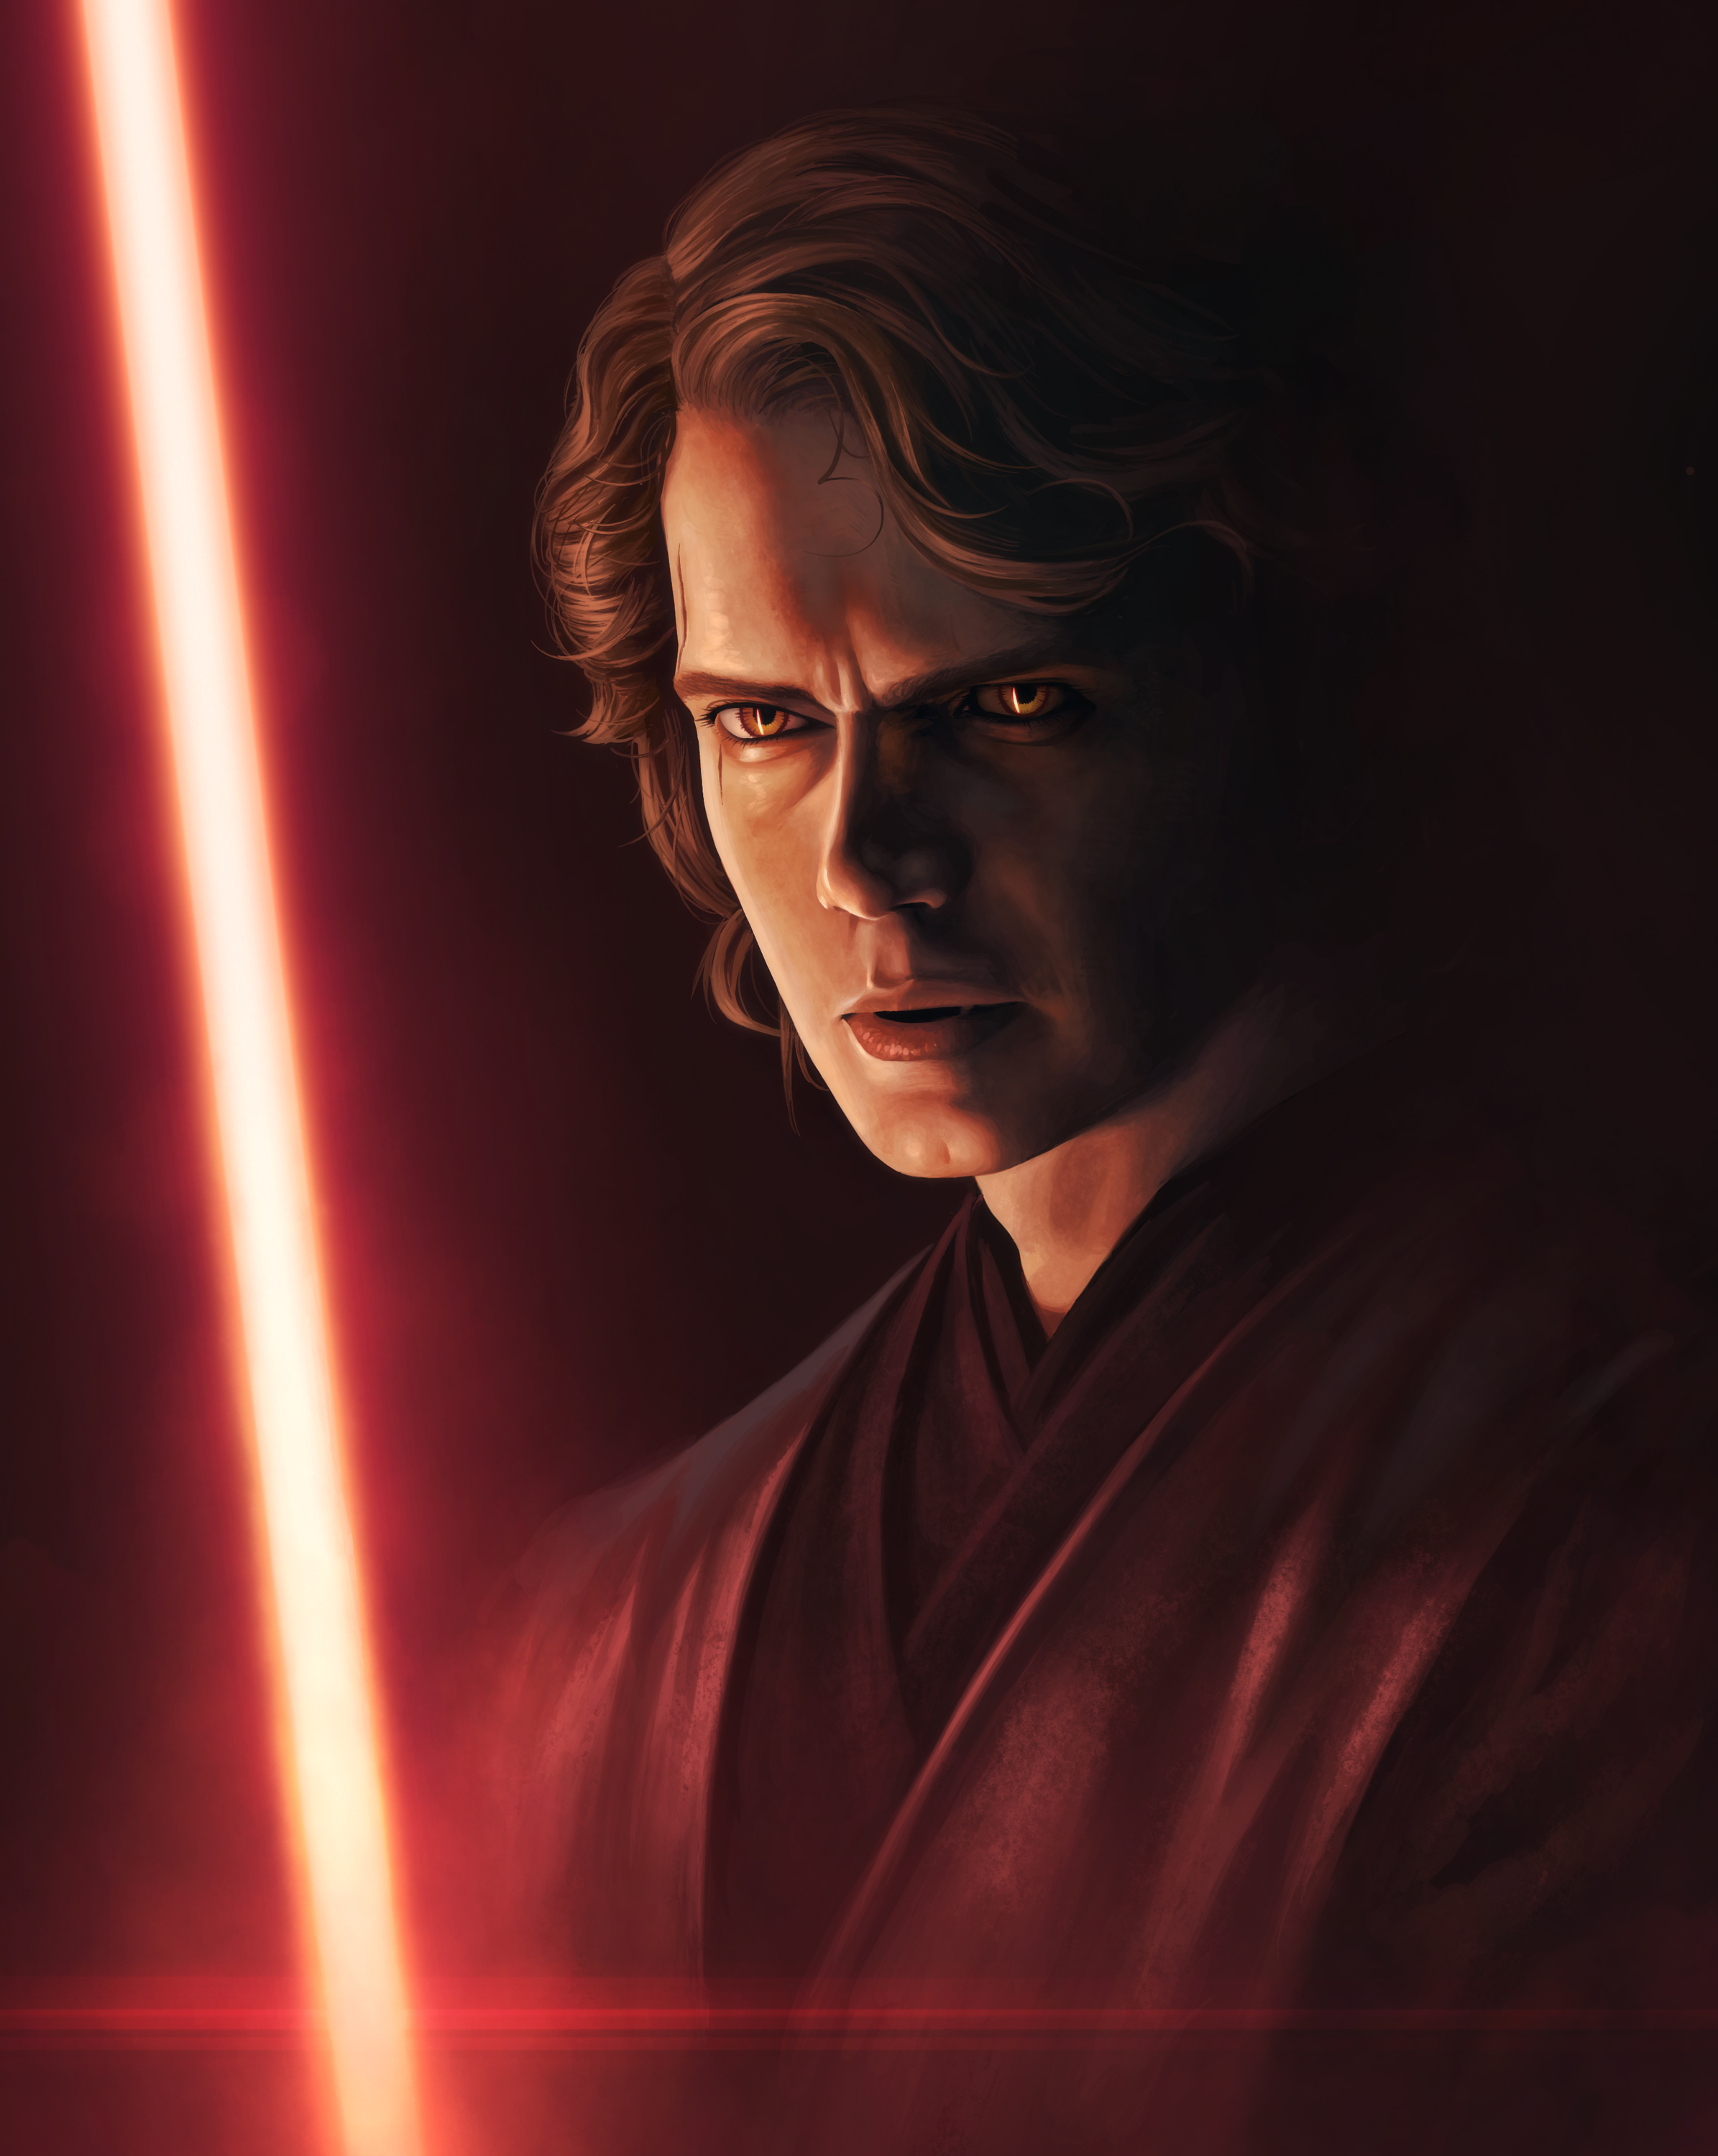 General 2390x3000 Star Wars Anakin Skywalker Sith lightsaber red background red movies portrait display digital art